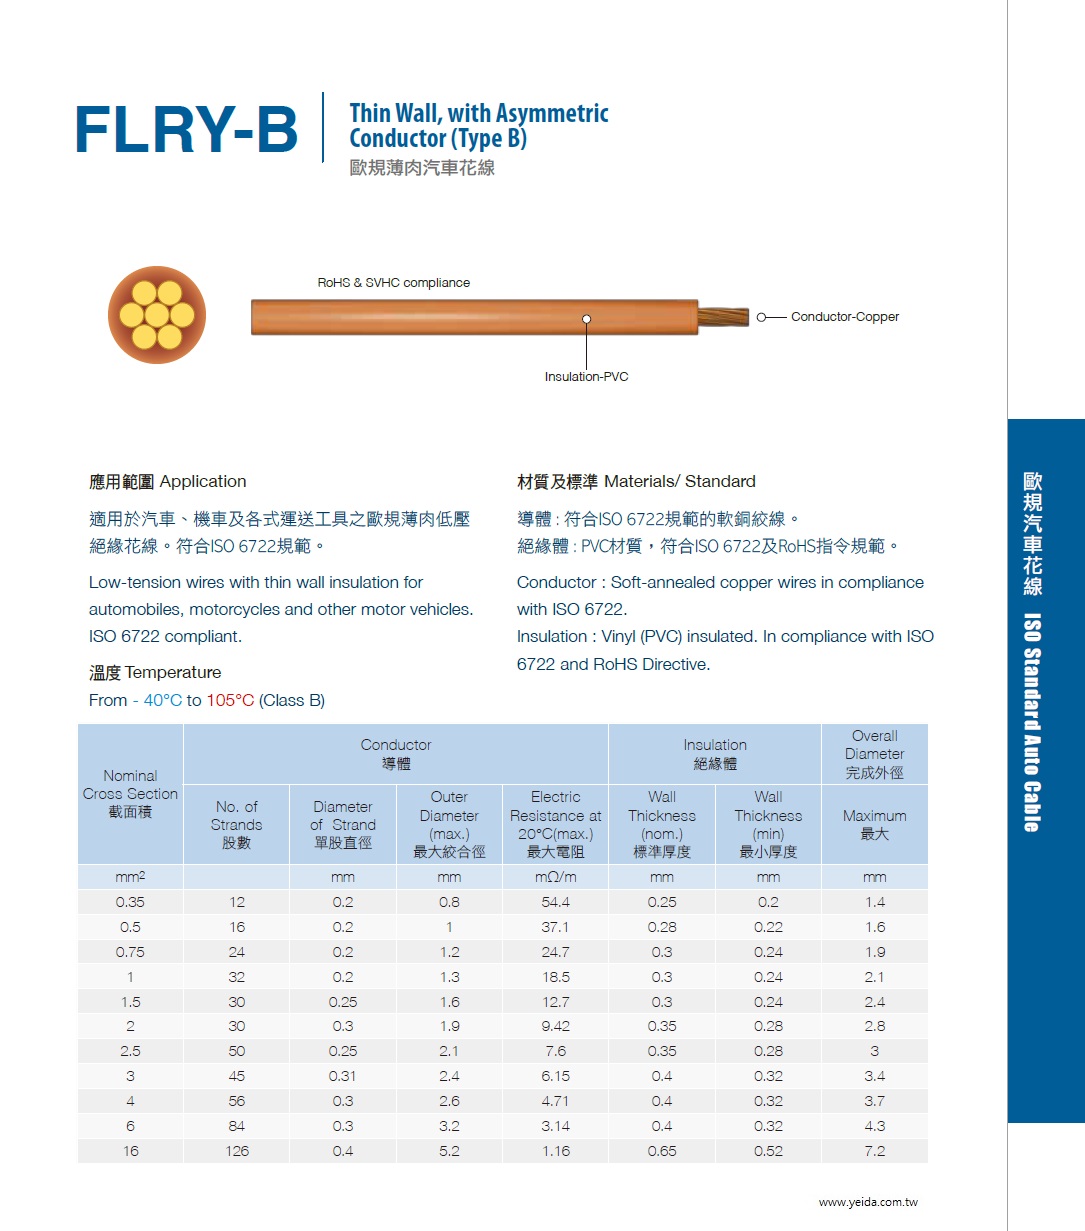 FLRY-B Thin Wall, with Asymmetric Conductor (Type B) 符合ISO 6722 PVC ISO 6722及RoHS指令規範歐規薄肉汽車花線產品圖